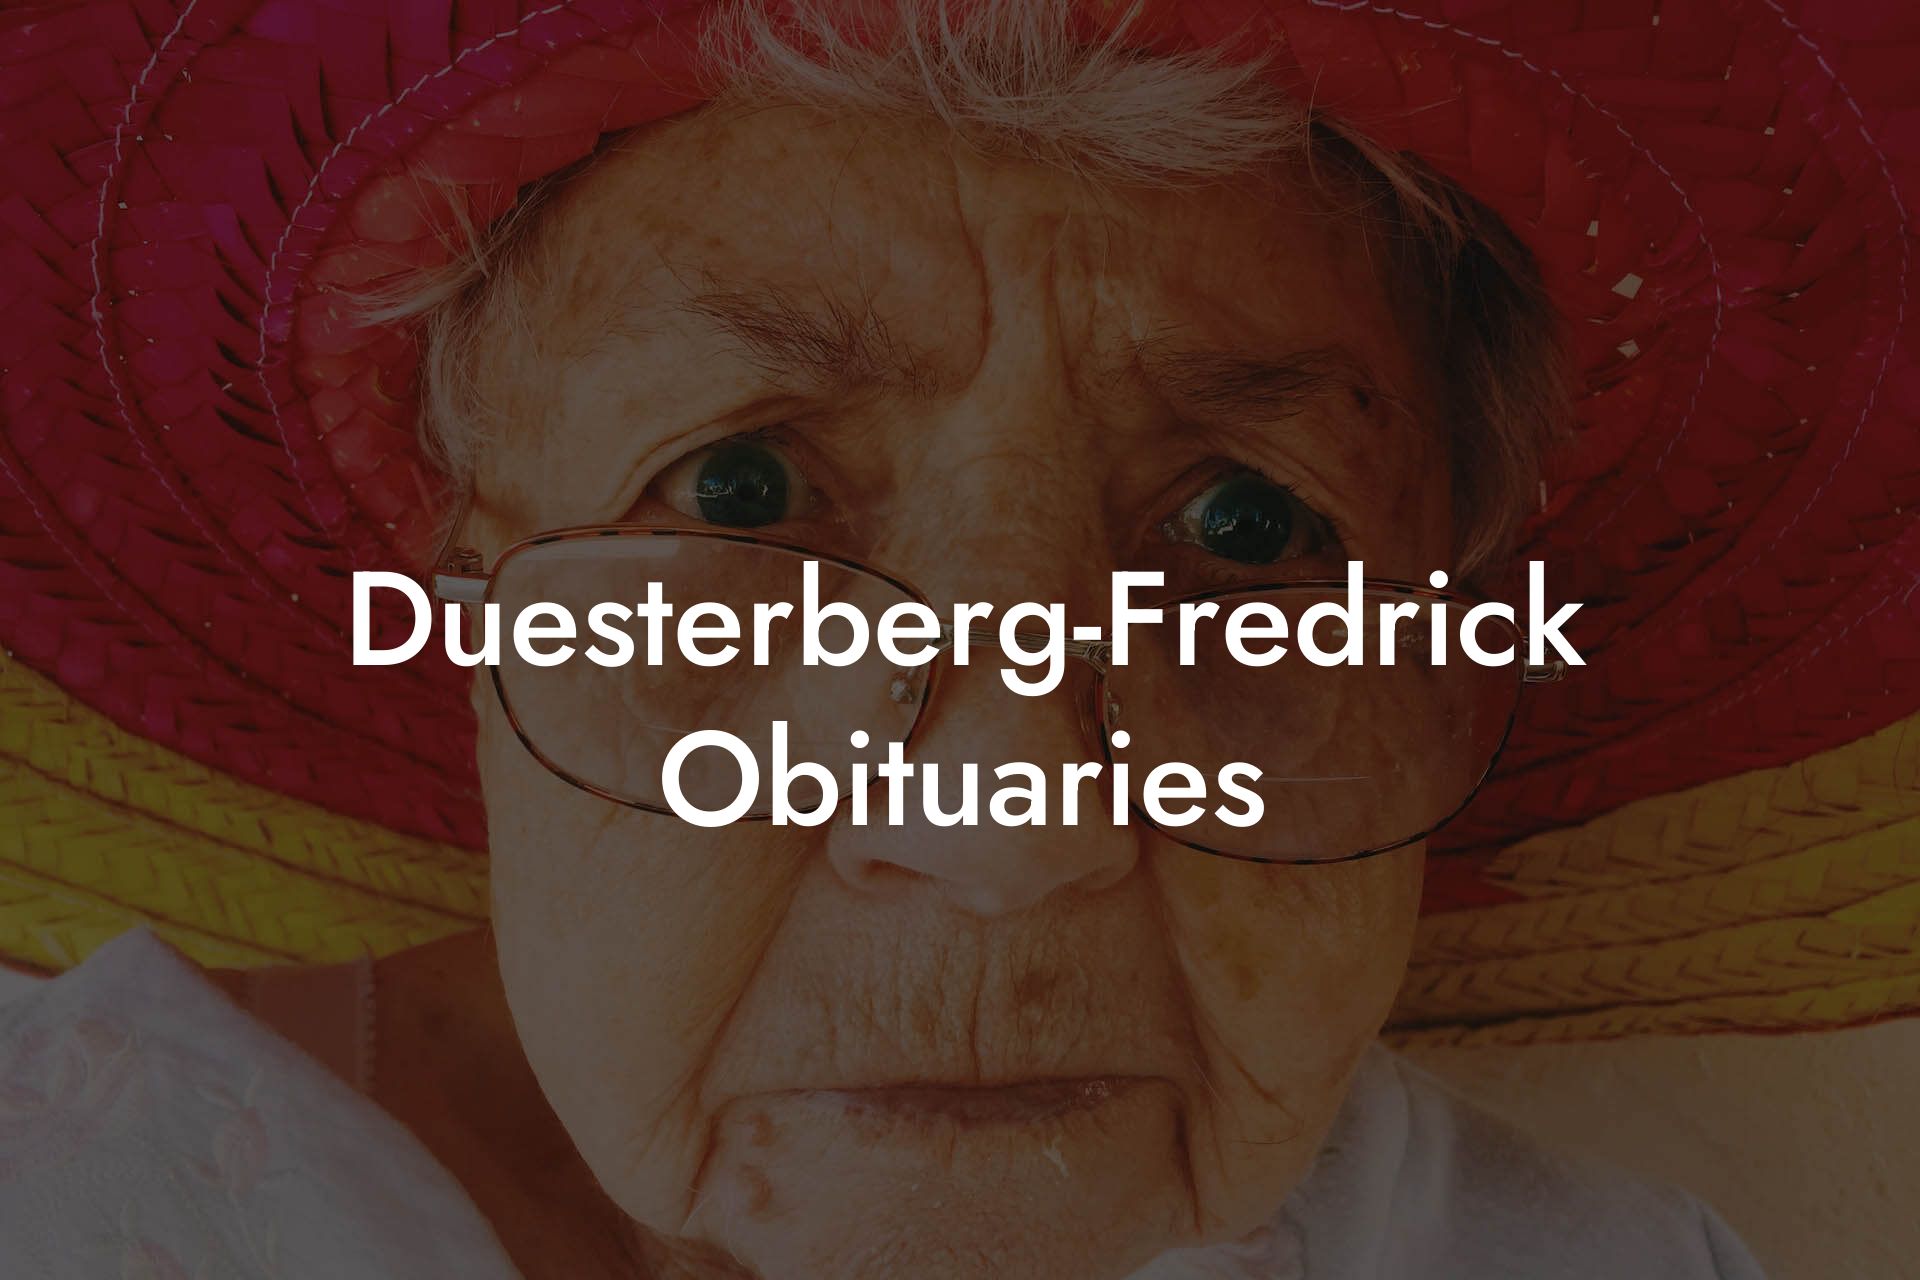 Duesterberg-Fredrick Obituaries